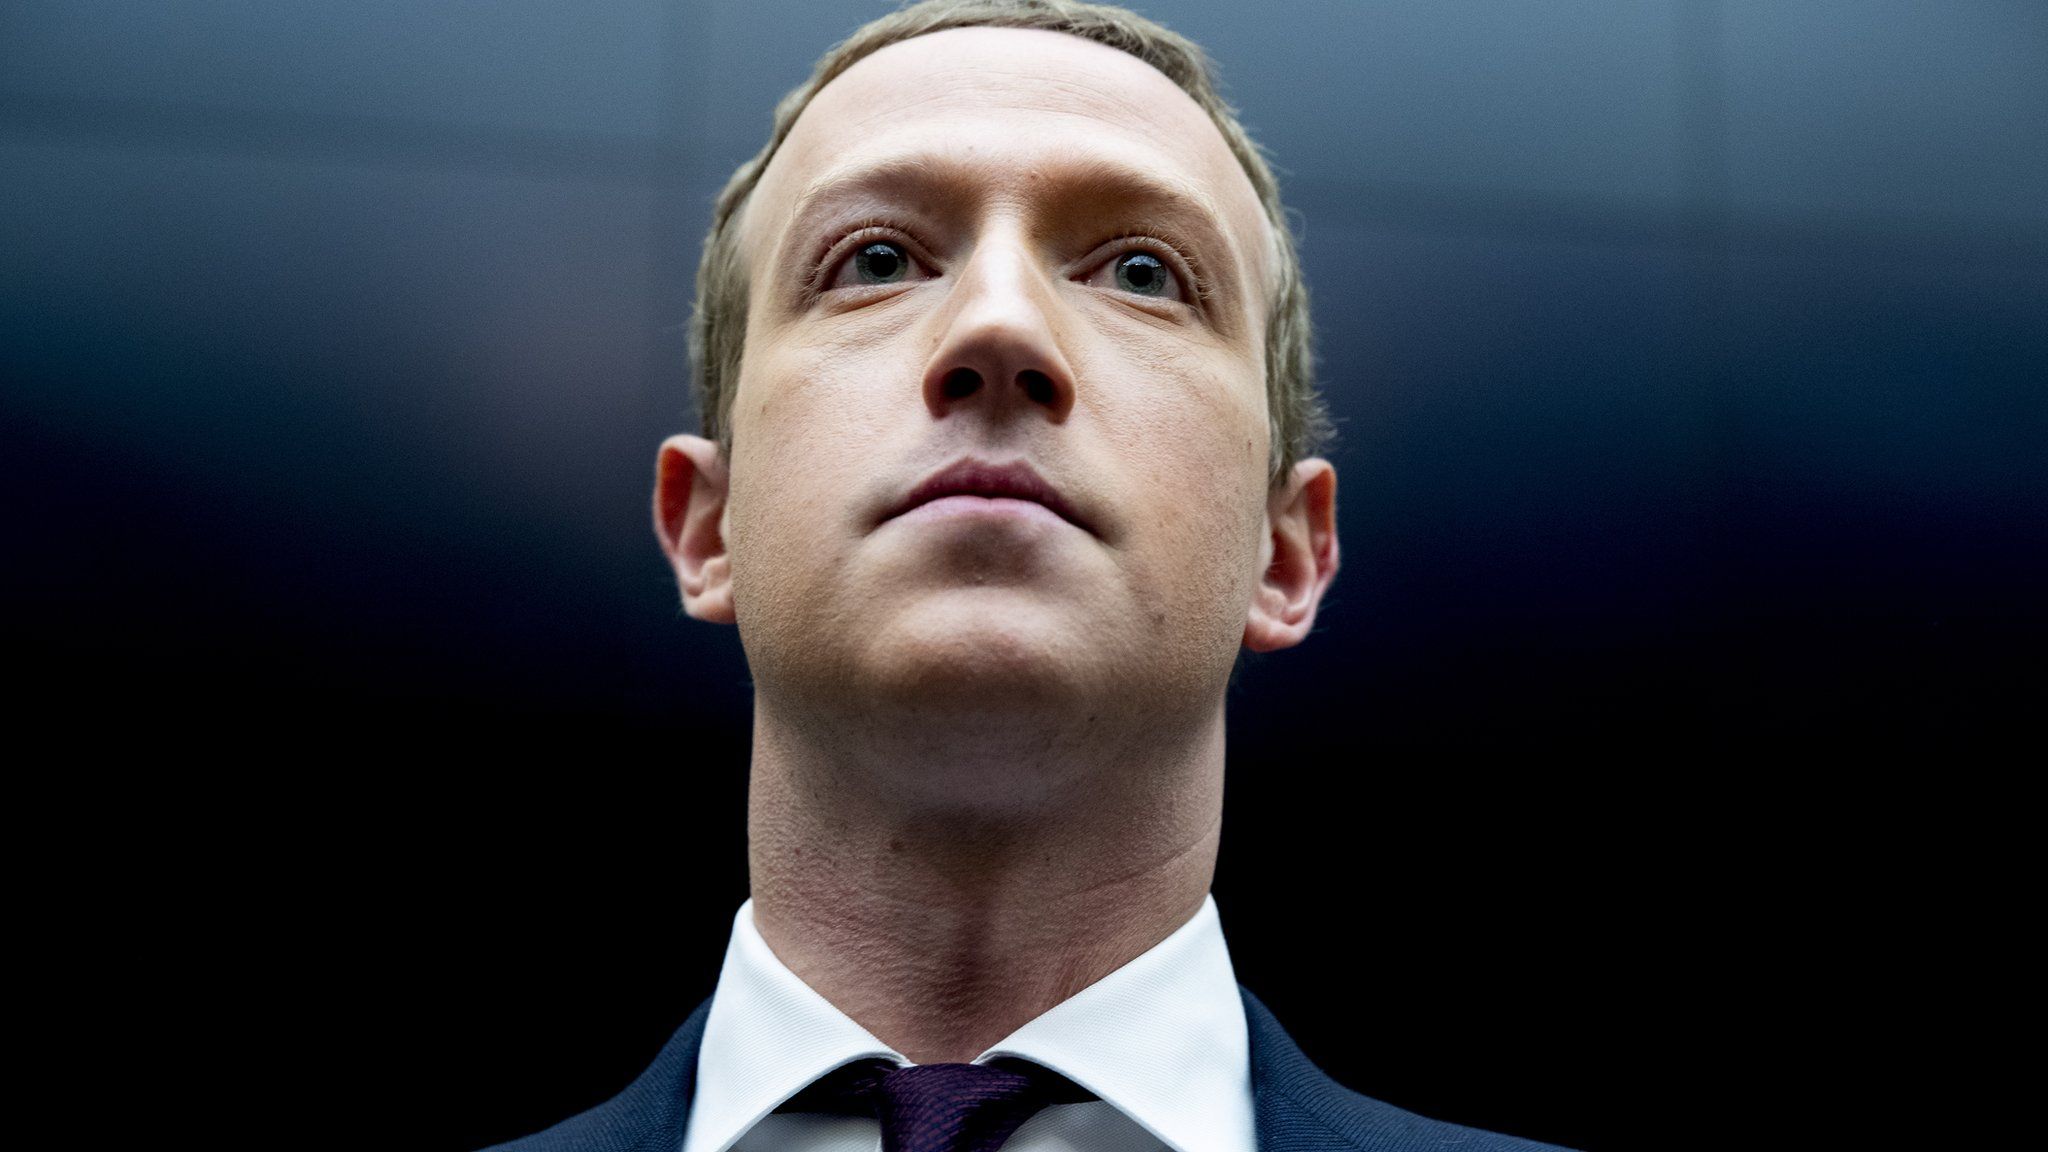 Chairman and CEO of Facebook Mark Zuckerberg